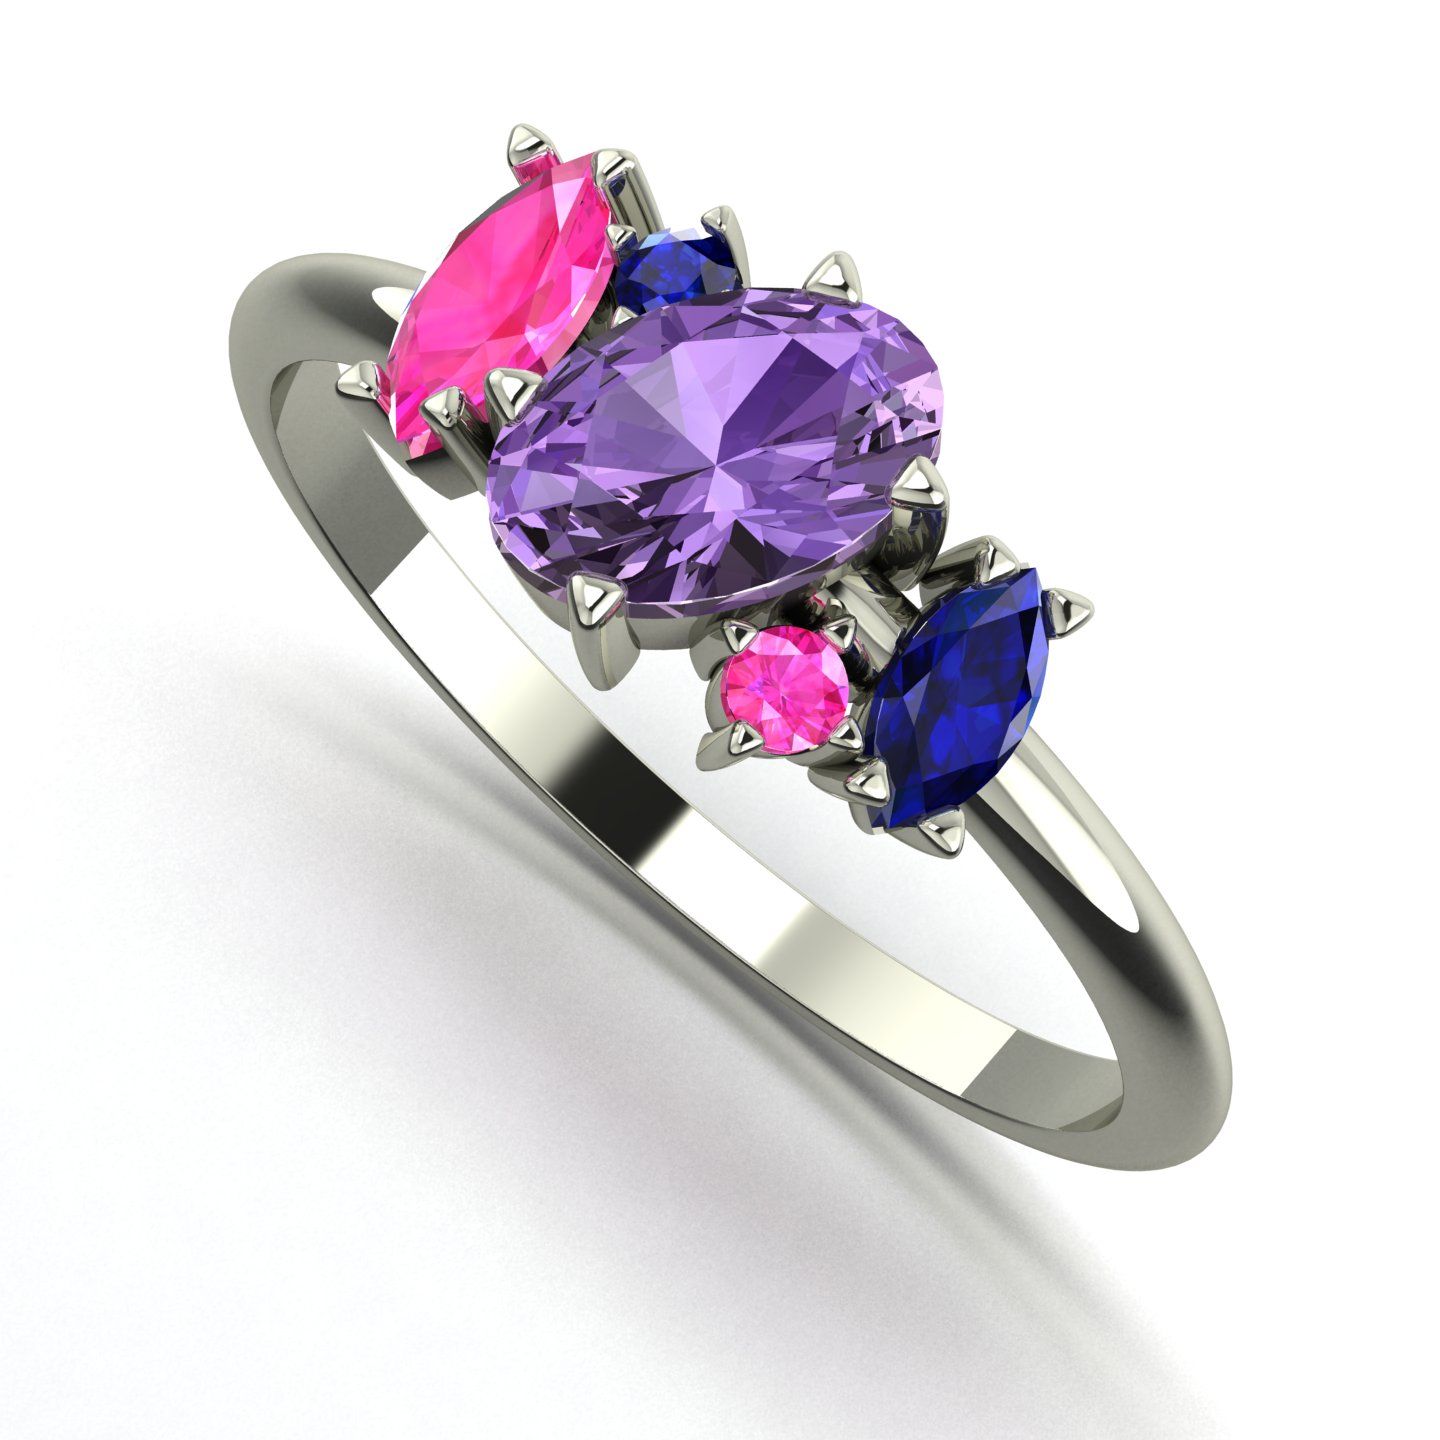 Rainbow sapphire atlantis engagement ring